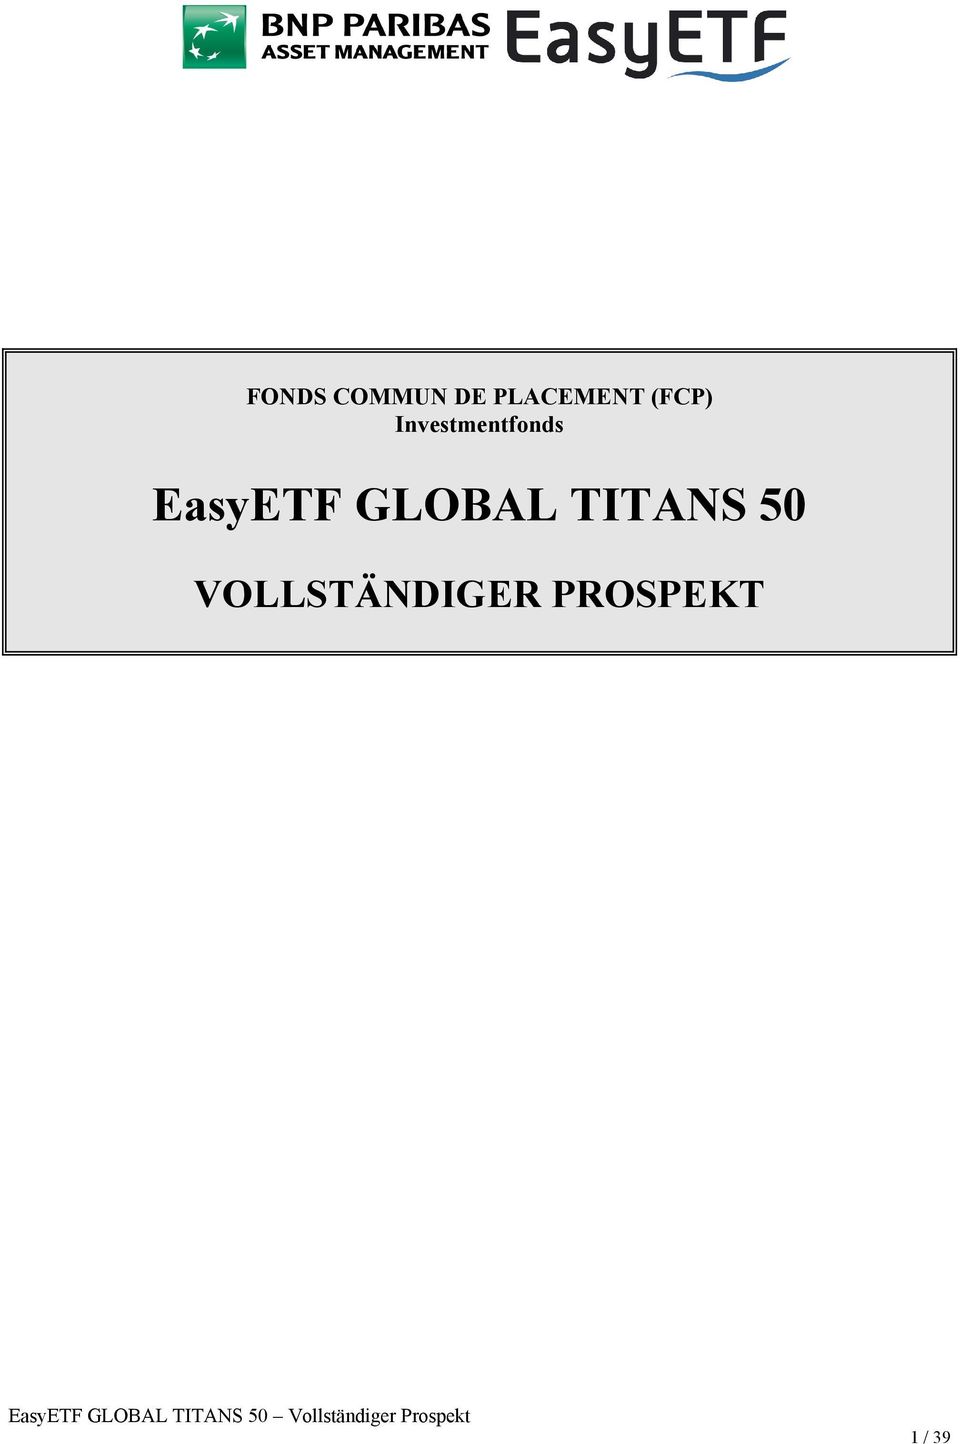 EasyETF GLOBAL TITANS 50